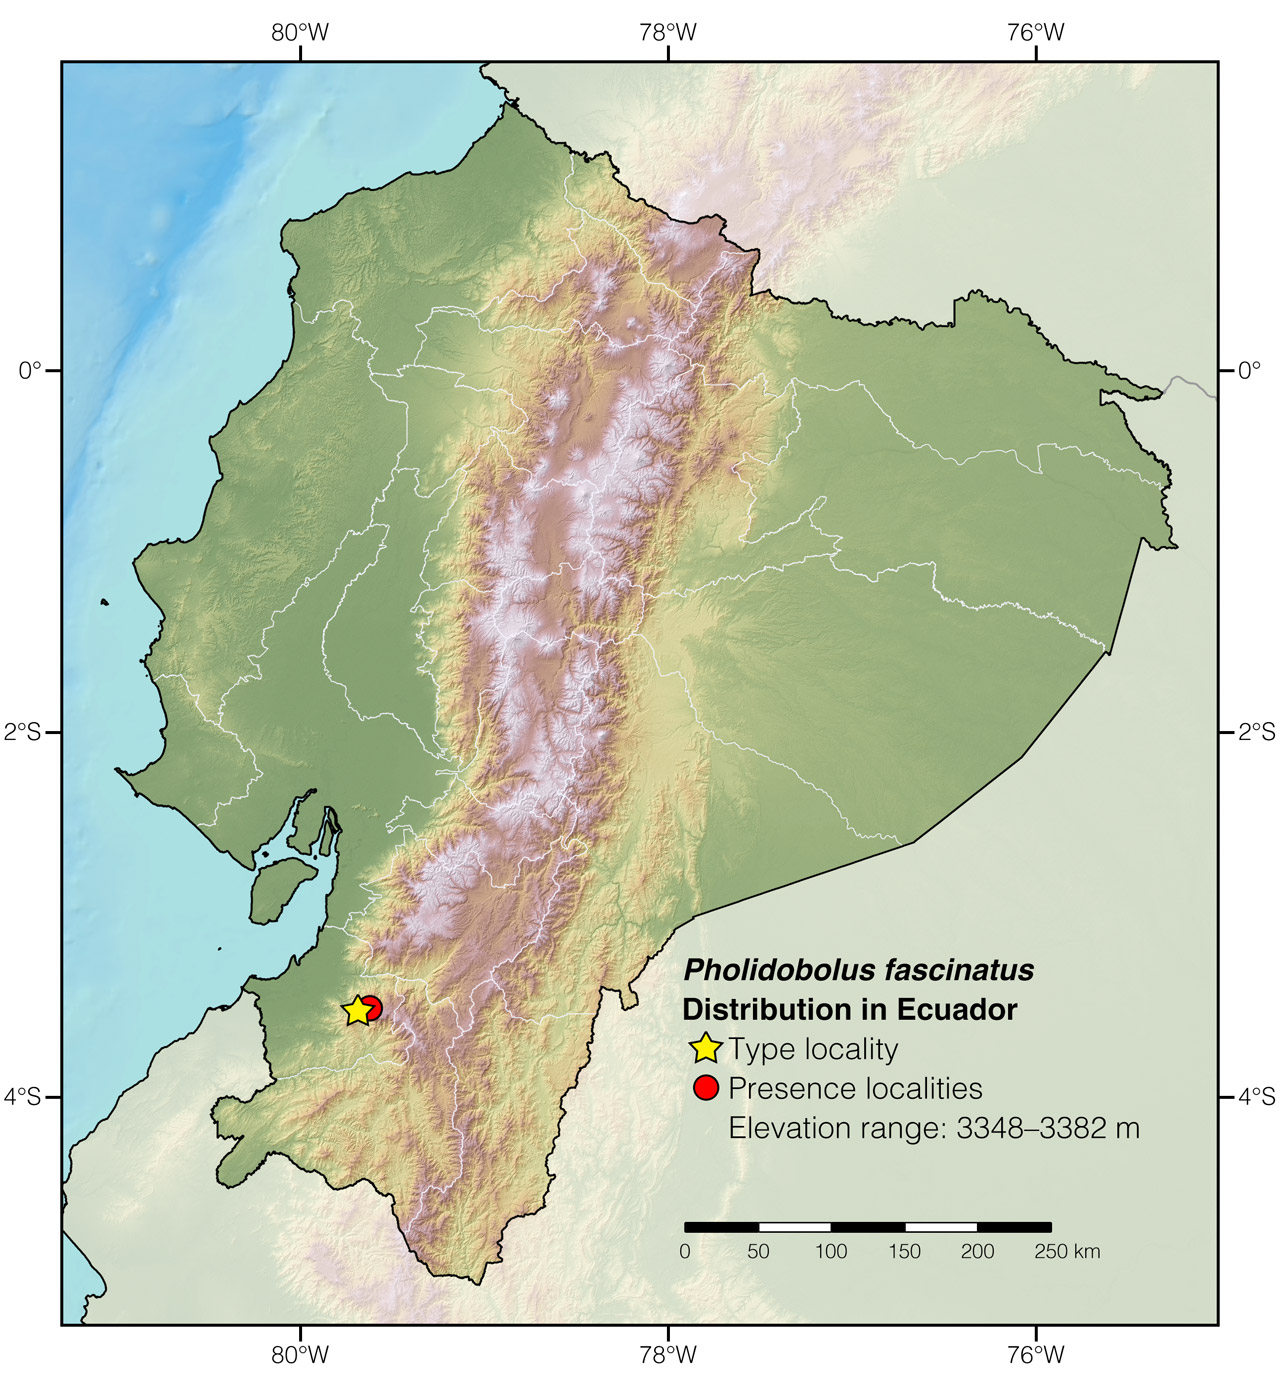 Distribution of Pholidobolus fascinatus in Ecuador